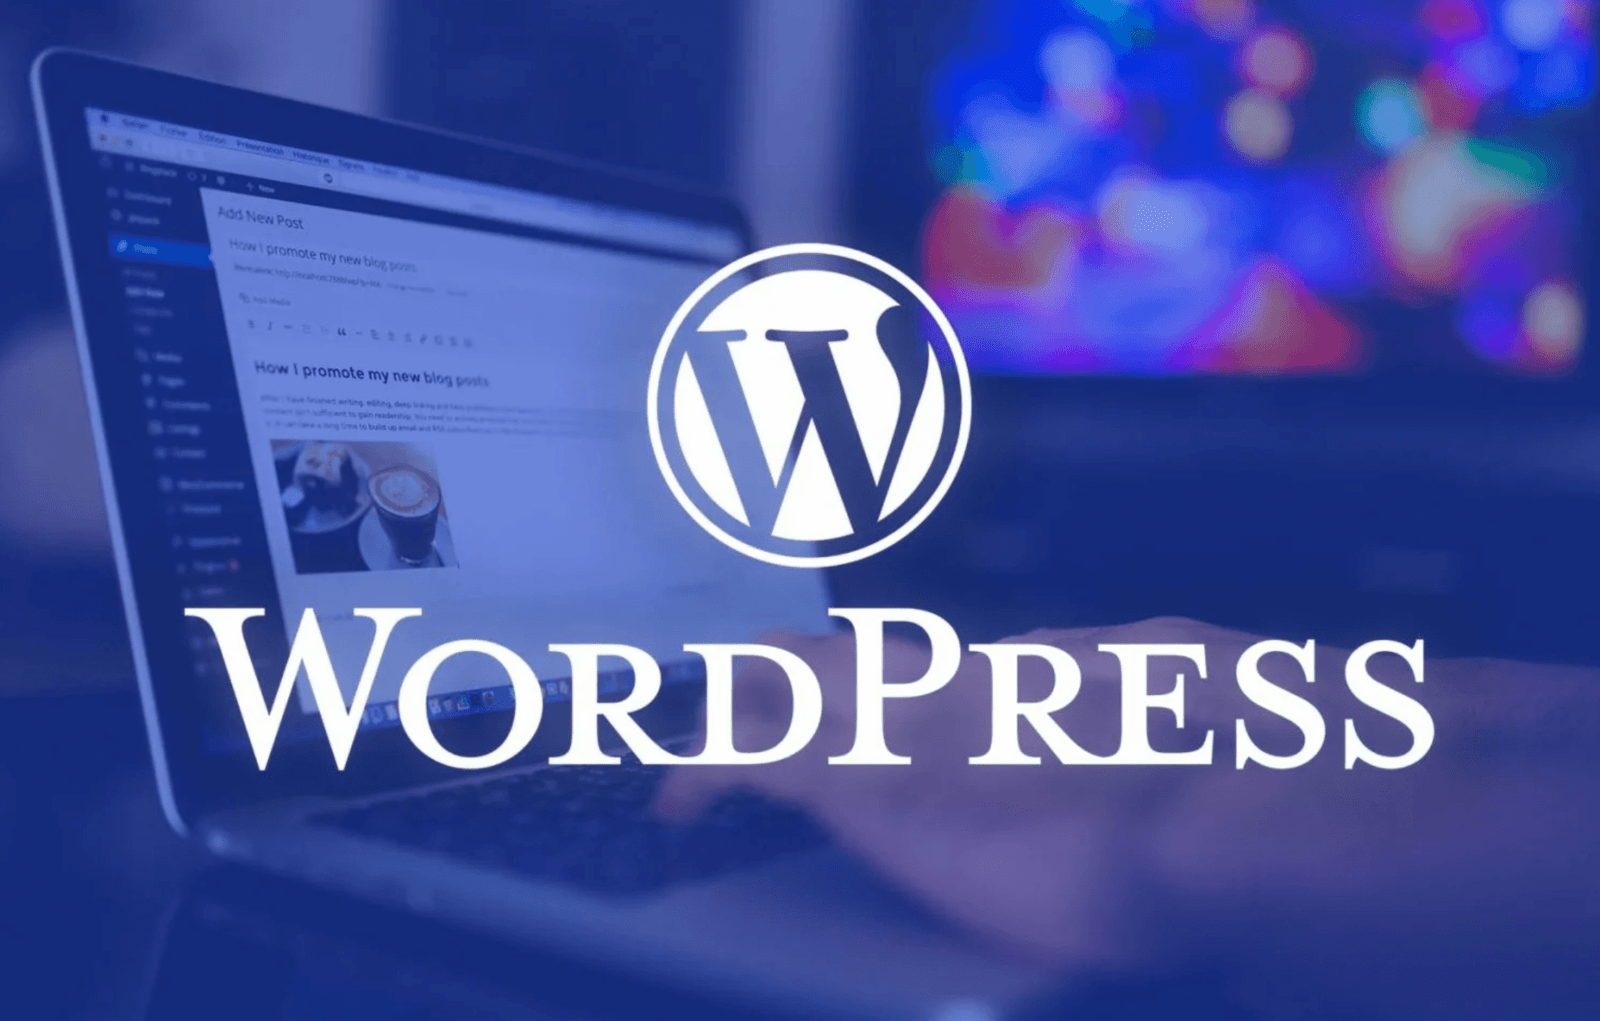 сайт на wordpress, wordpress рубрика, создание сайта на wordpress, почему wordpress, плюсы wordpress, wordpress blog